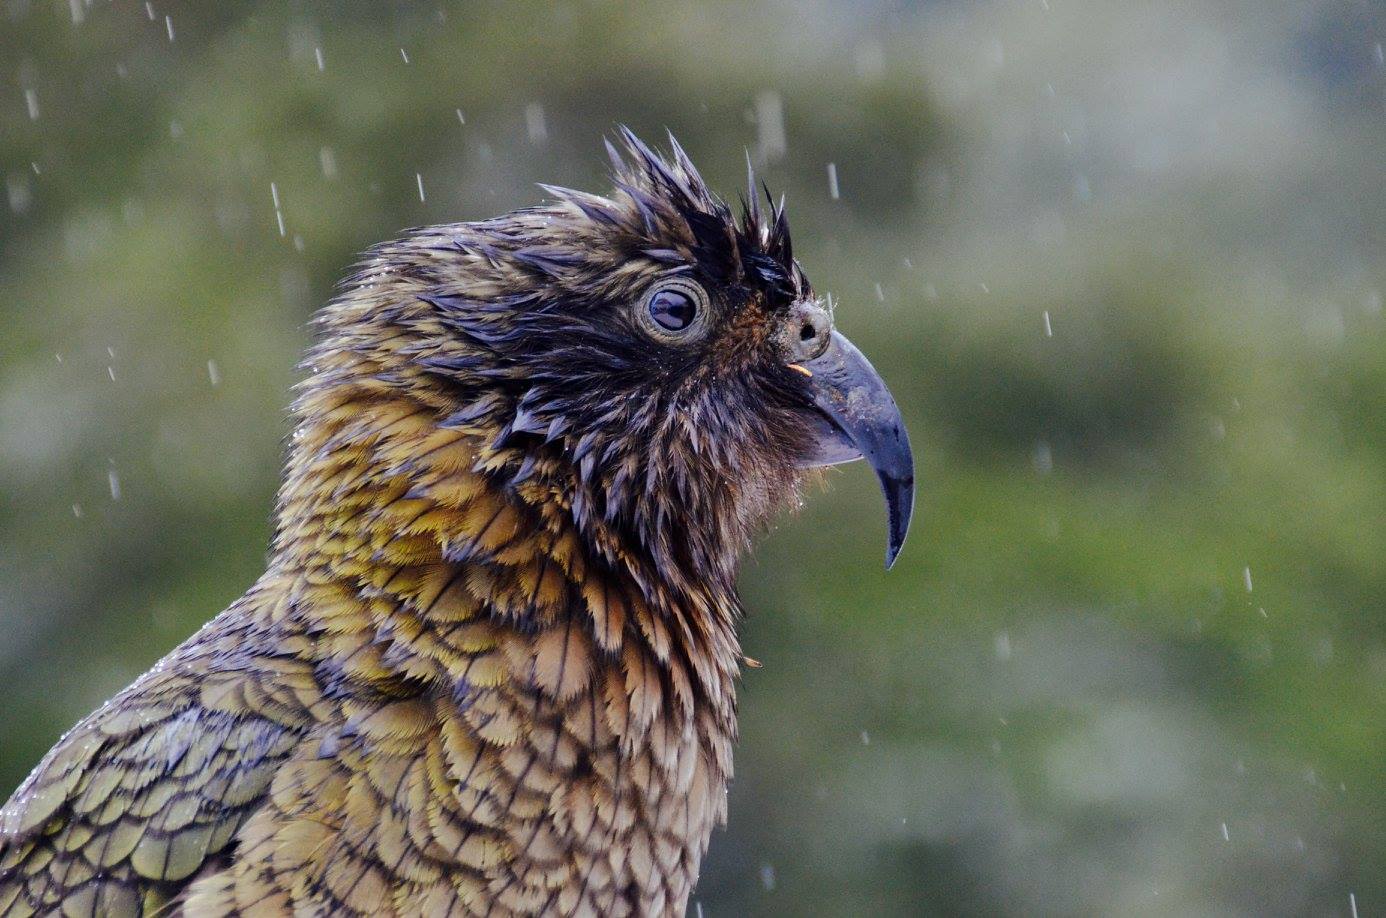 A kea bird posing amidst the rains of Milford Sound